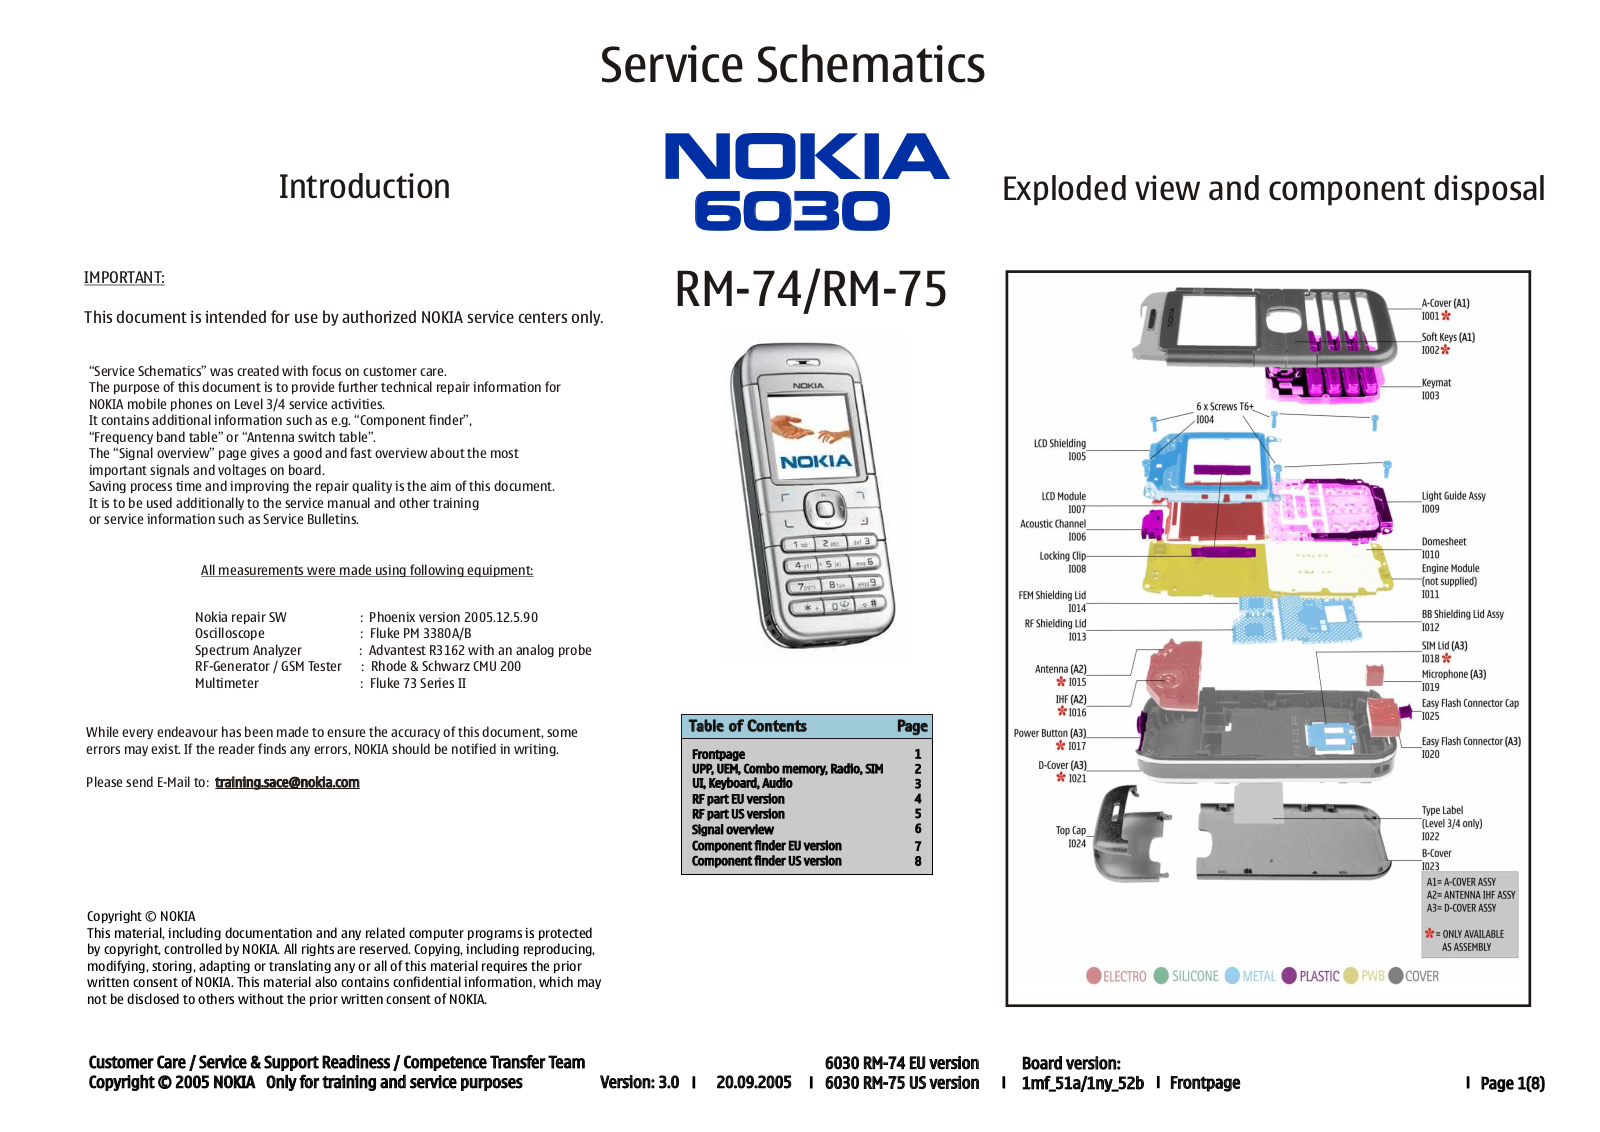 Nokia 6030 RM-74, 6030 RM-75 Schematic